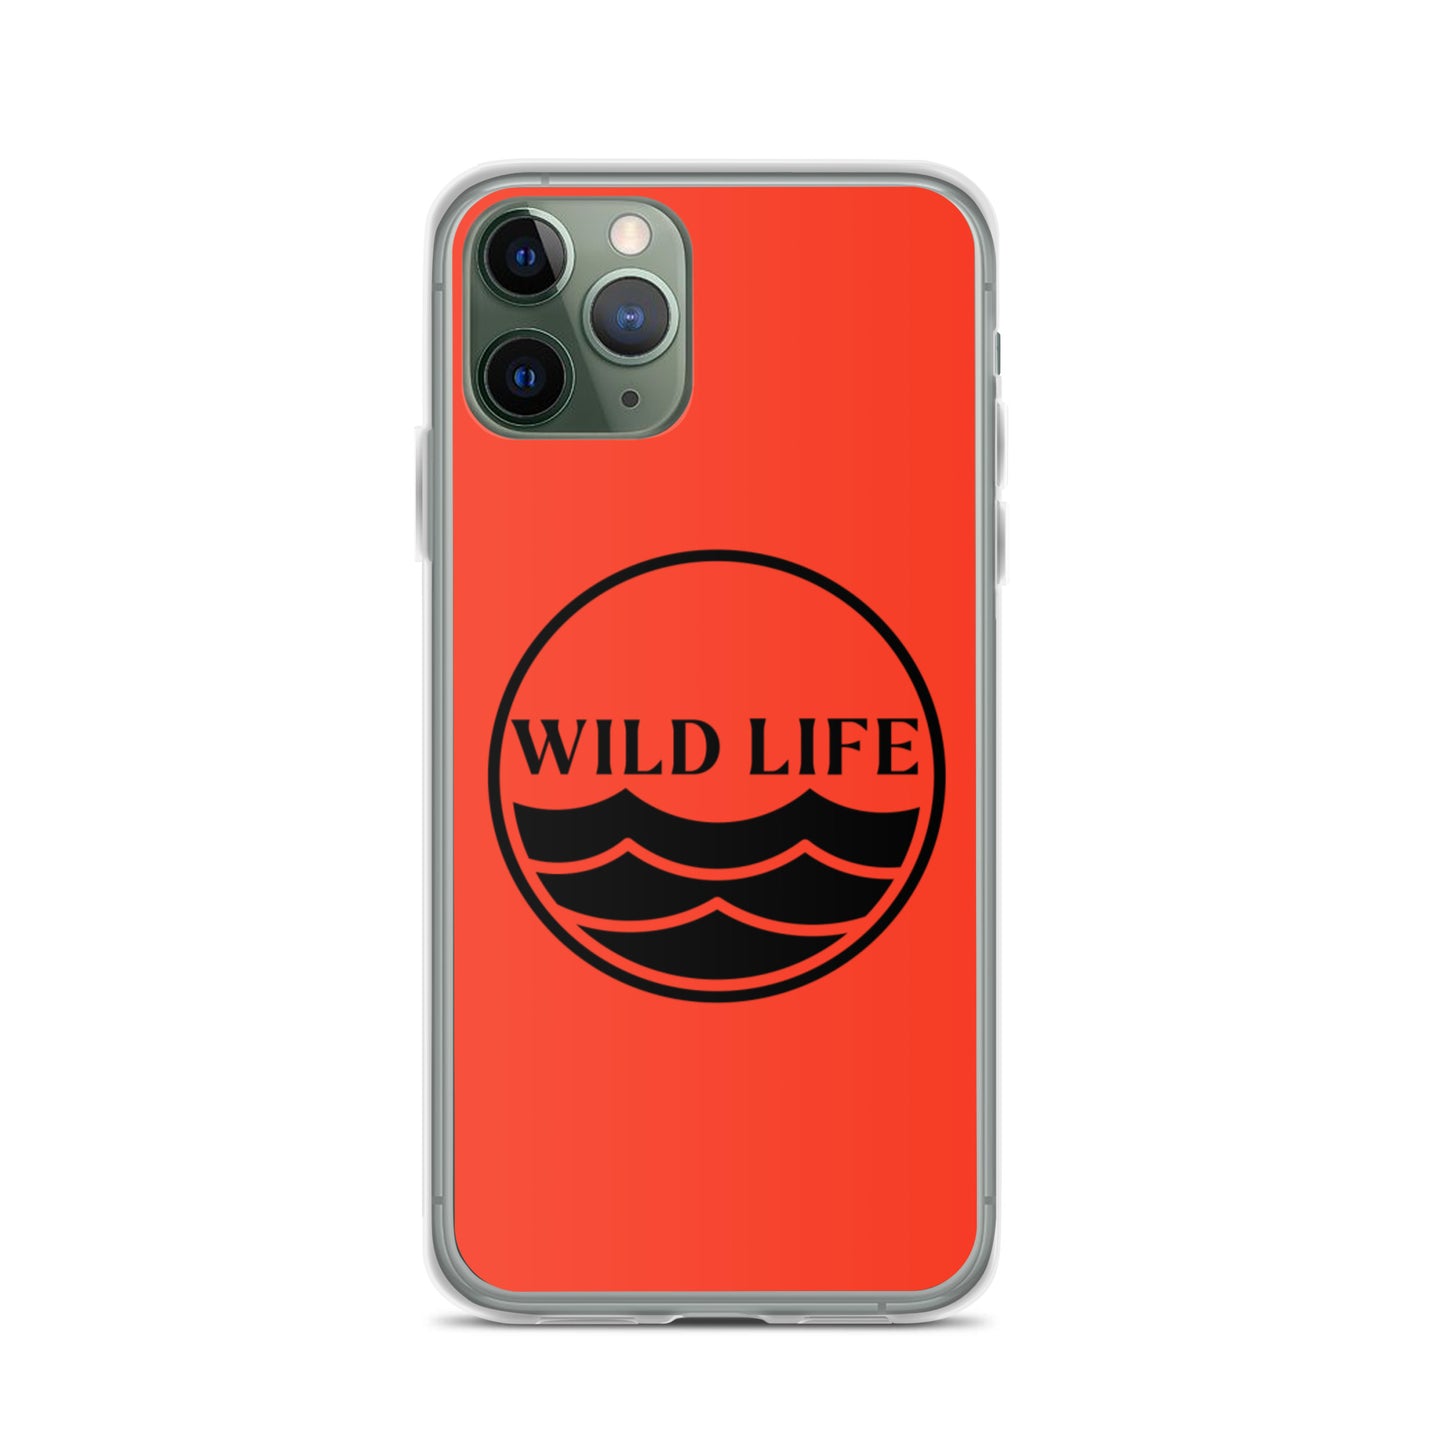 WILD LIFE iPhone Case - Fire Orange